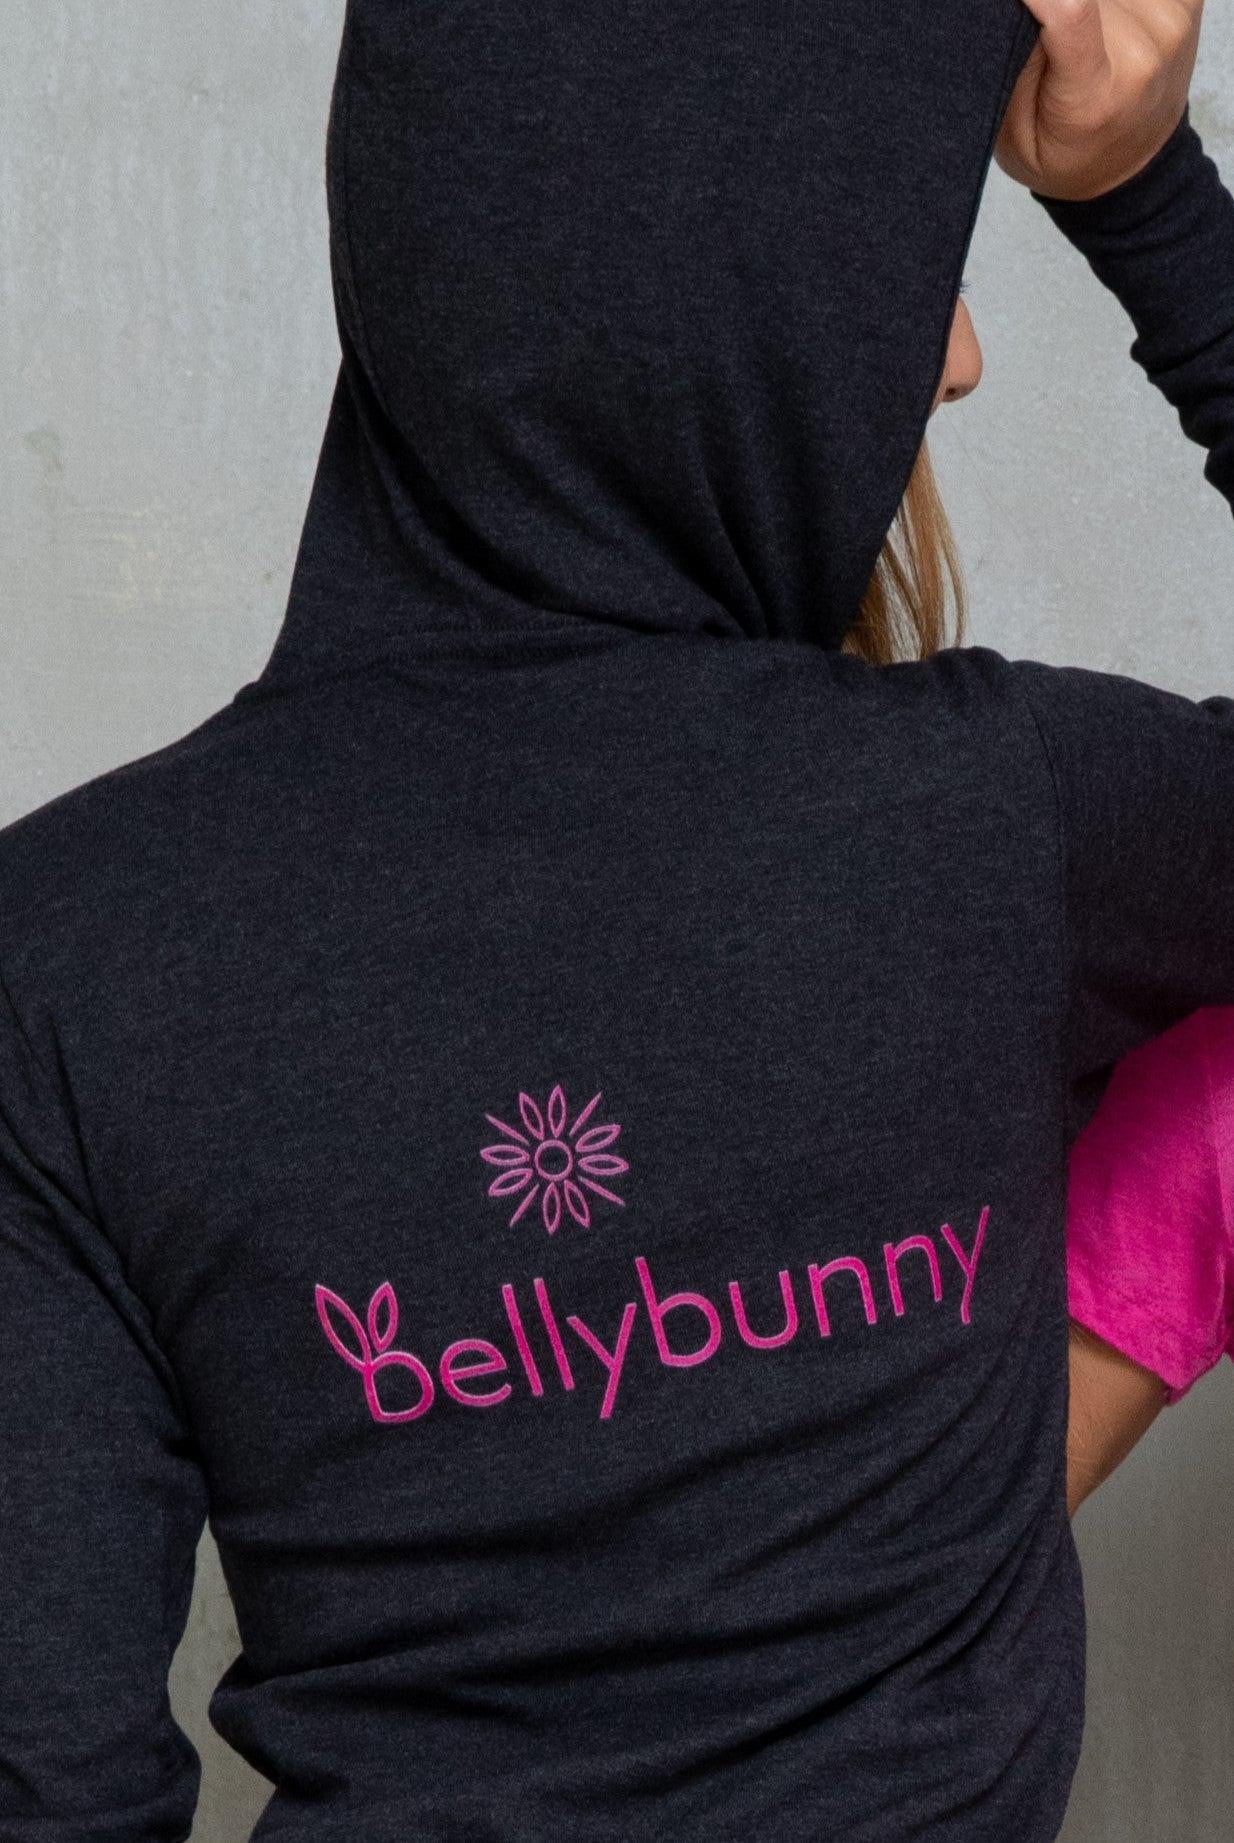 Bellybunny Women's Zip-Up Hoodie-Charcoal black Triblend-pink logo